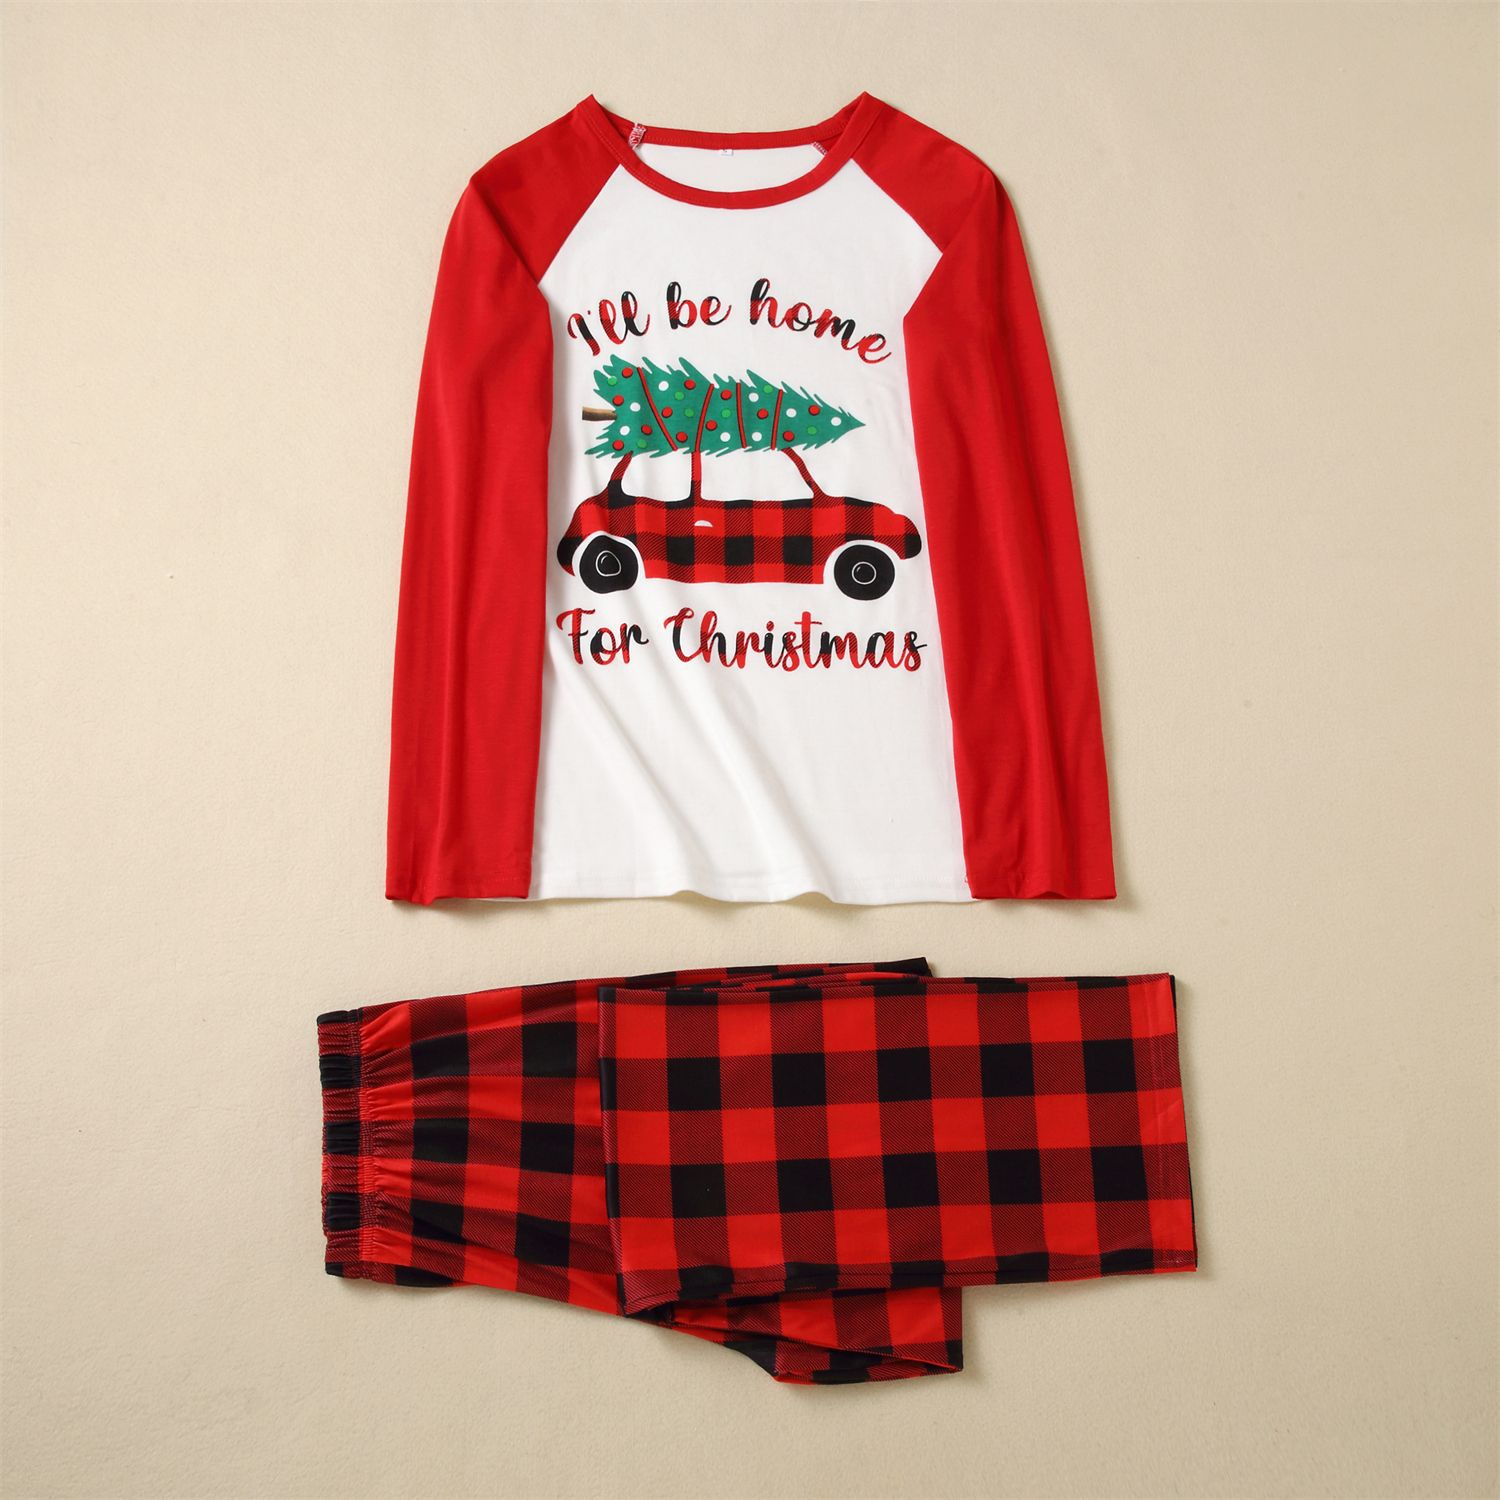 Red 'I Wll Be Home From Christmas' Printed Plaid Christmas Family Matching Long-sleeve Pajamas Sets